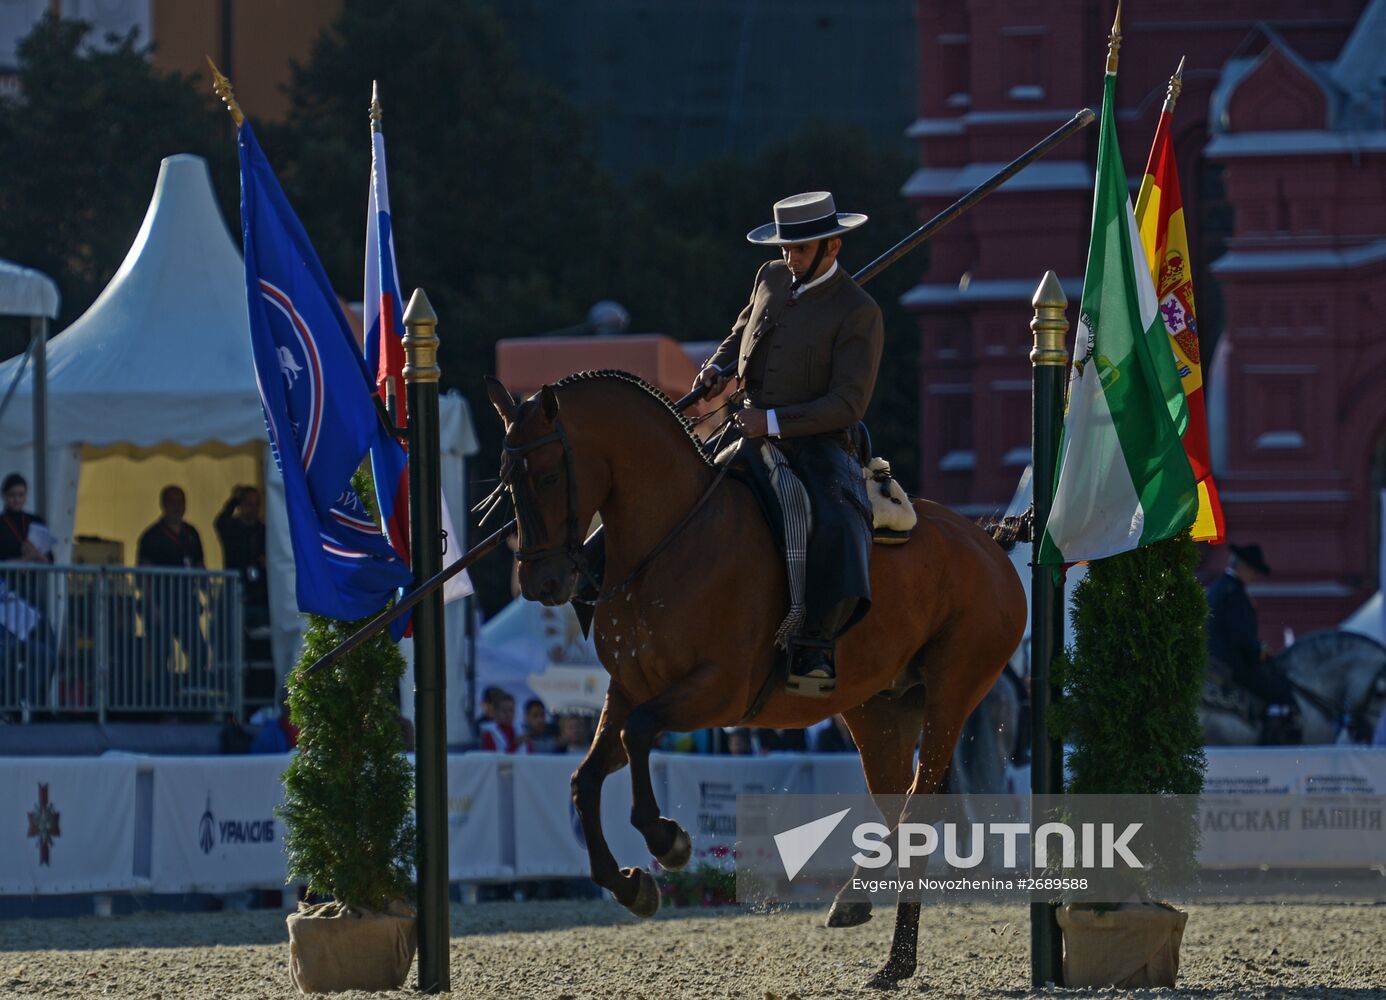 International Military Music Festival Spasskaya Tower. Equestrian Day